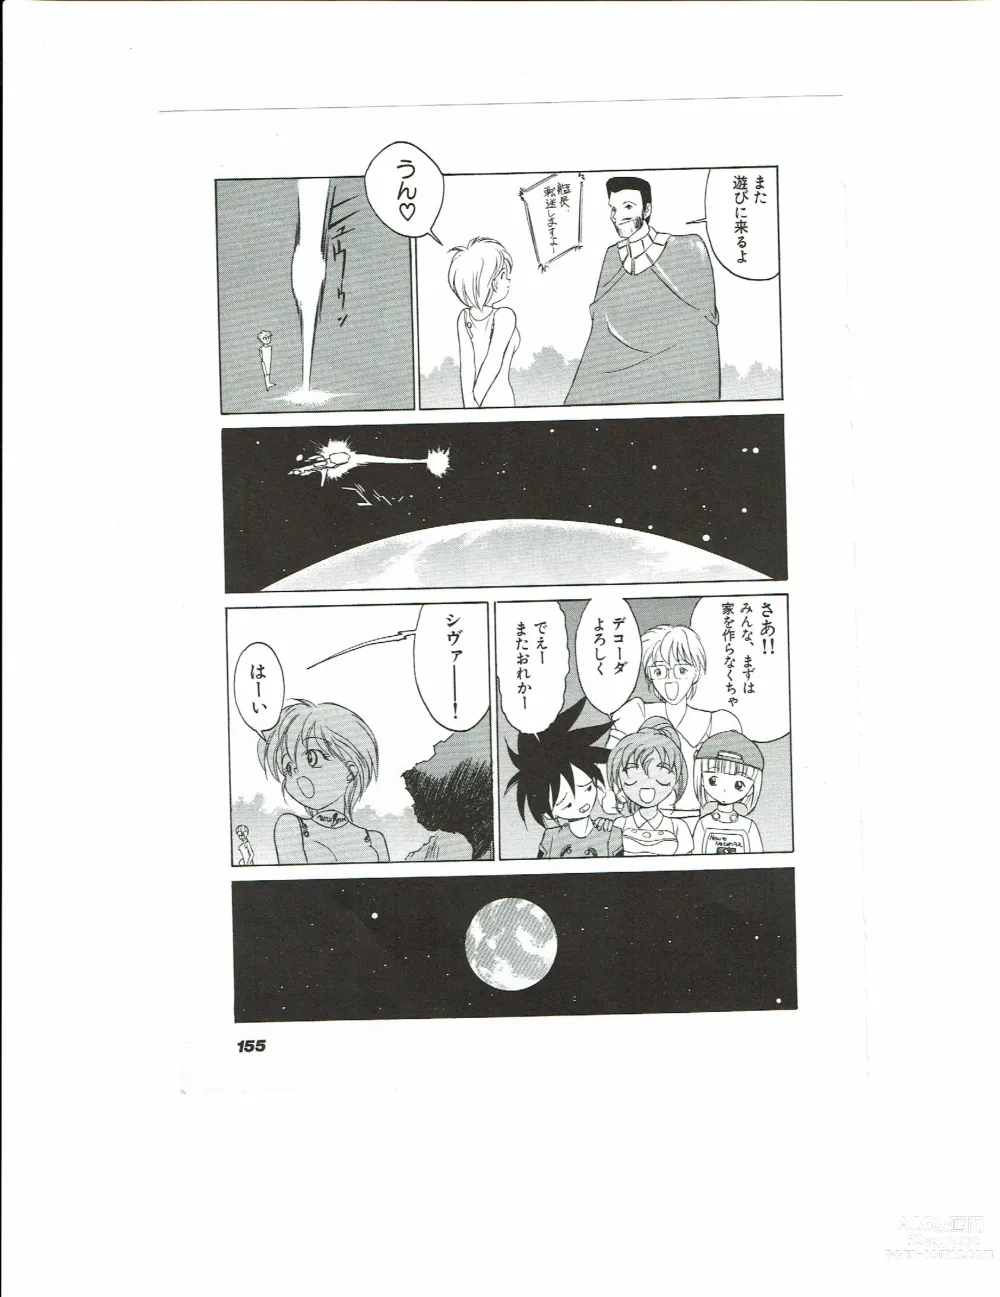 Page 158 of doujinshi Kyouka Ningen Monogatari: Mad Wang 1160（Enhanced Human Tale: MAD WANG 1160）（Japanese）